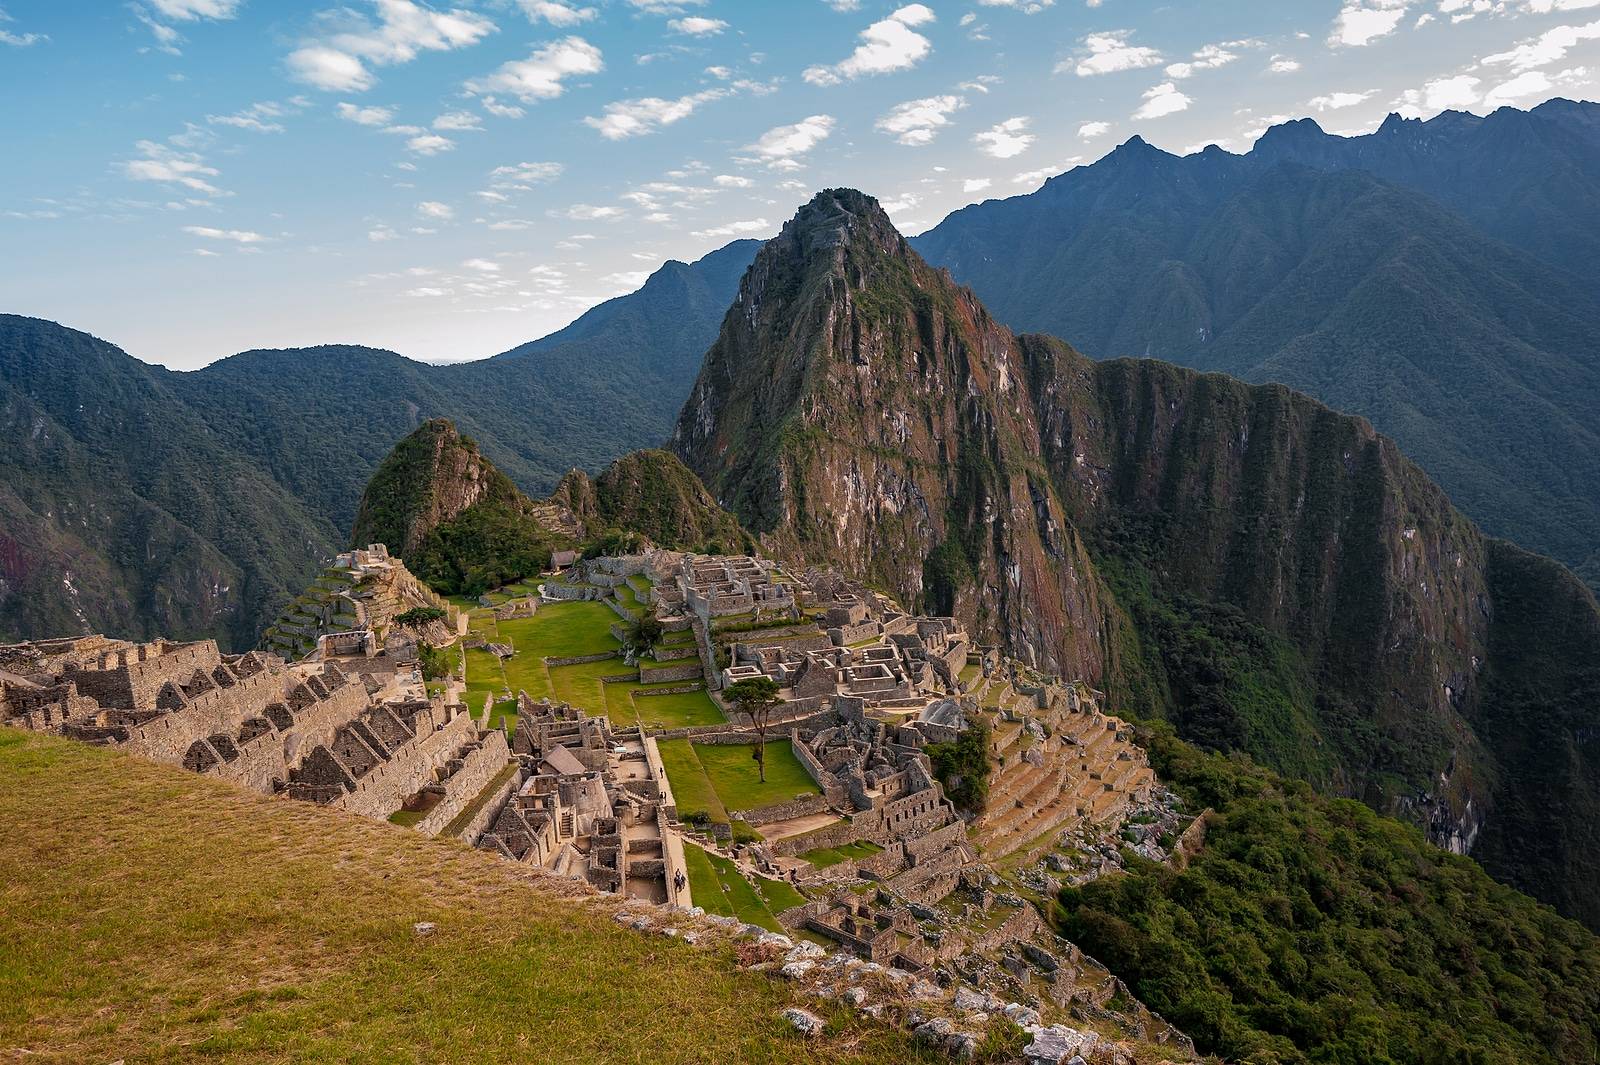 View of the ancient city of Machu Picchu, Peru